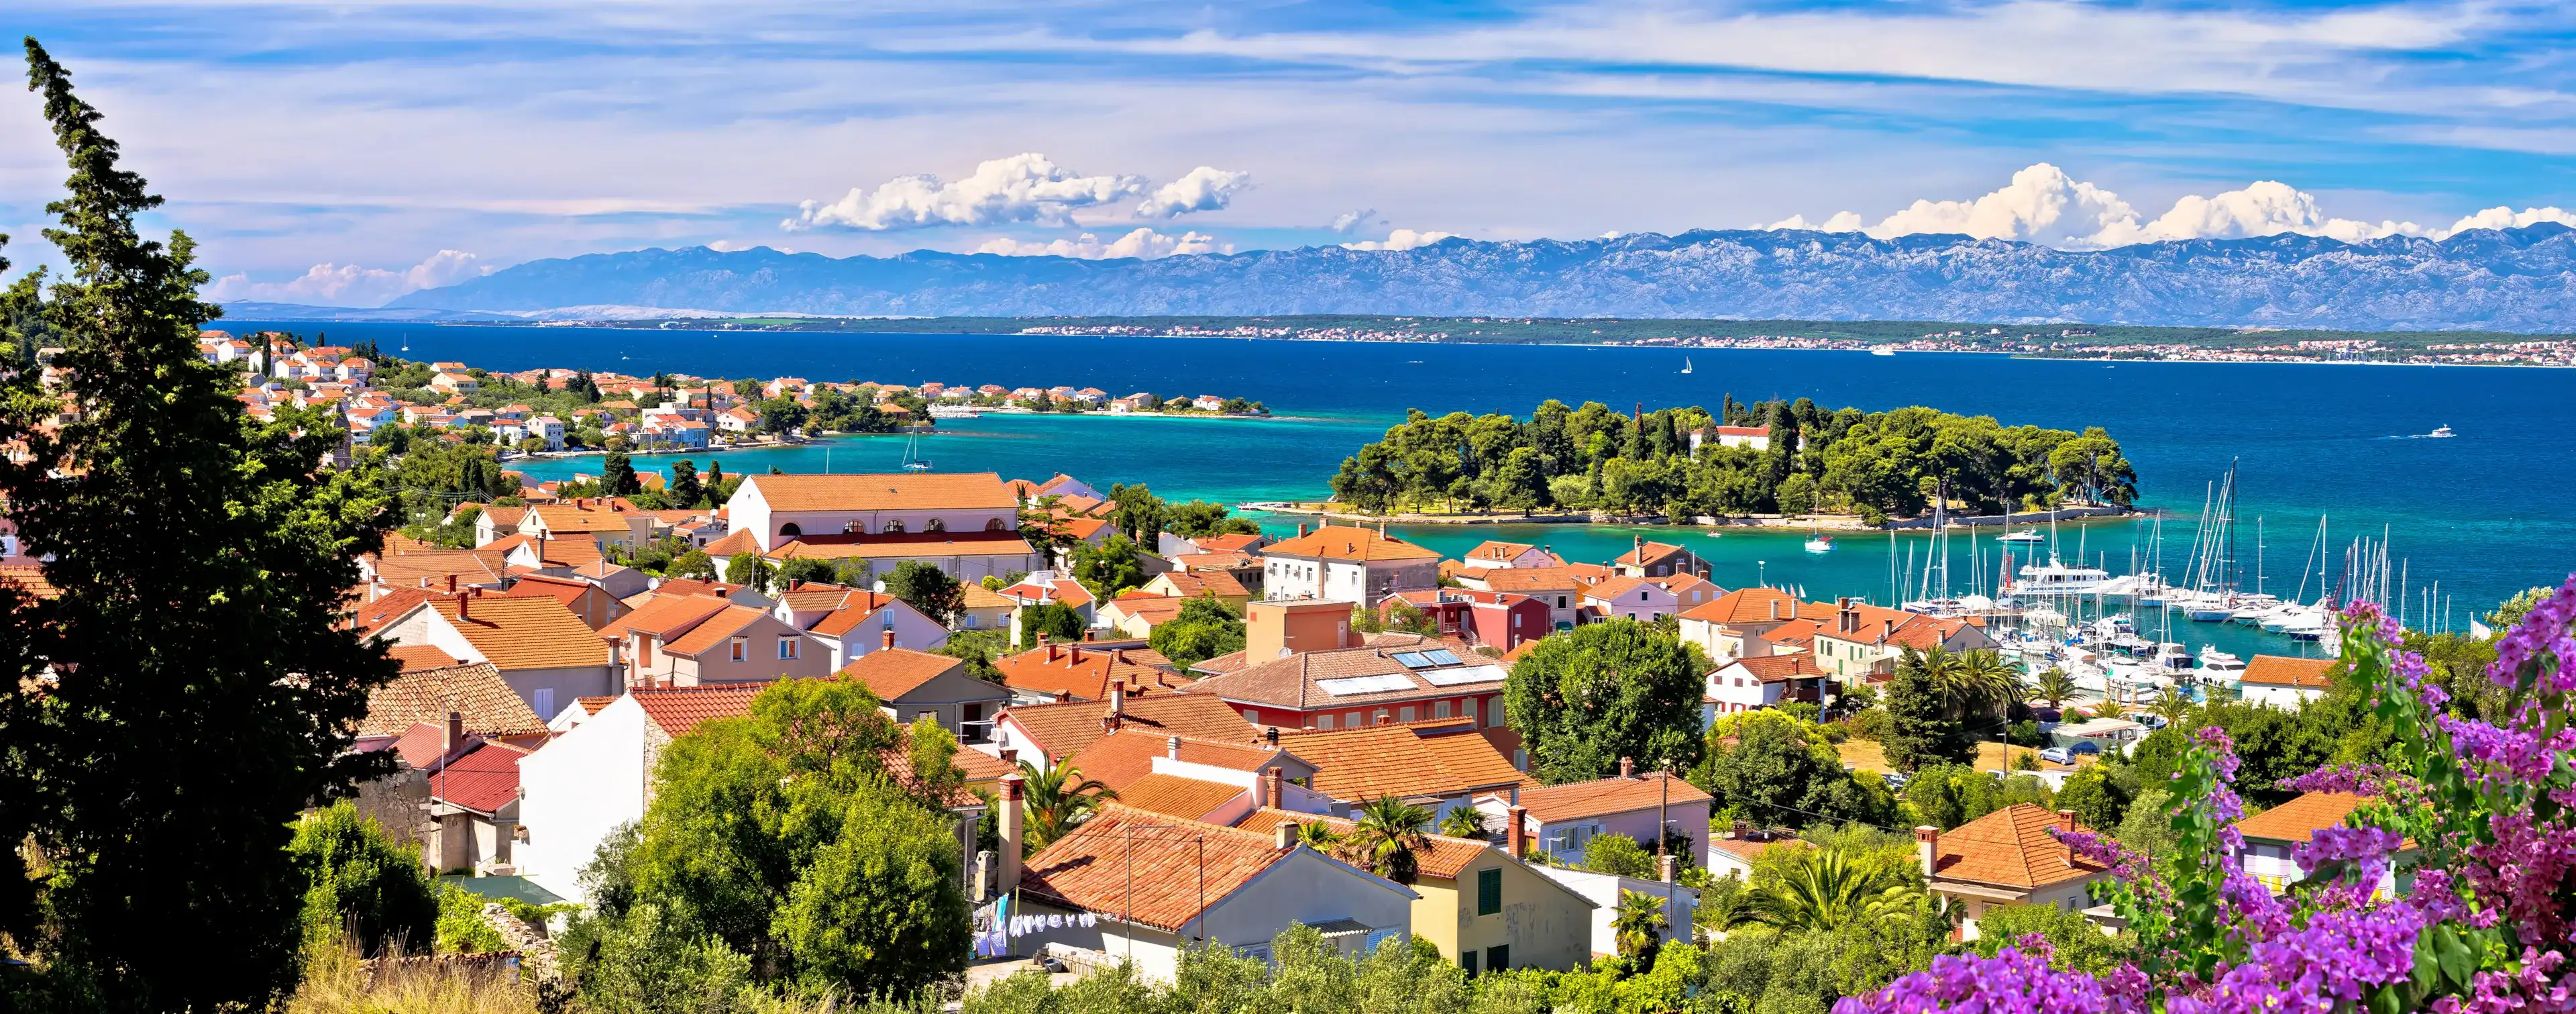 Zadar archipelago. Island of Ugljan waterfront and Galovac islet panoramic view, Preko in Dalmatia region of Croatia